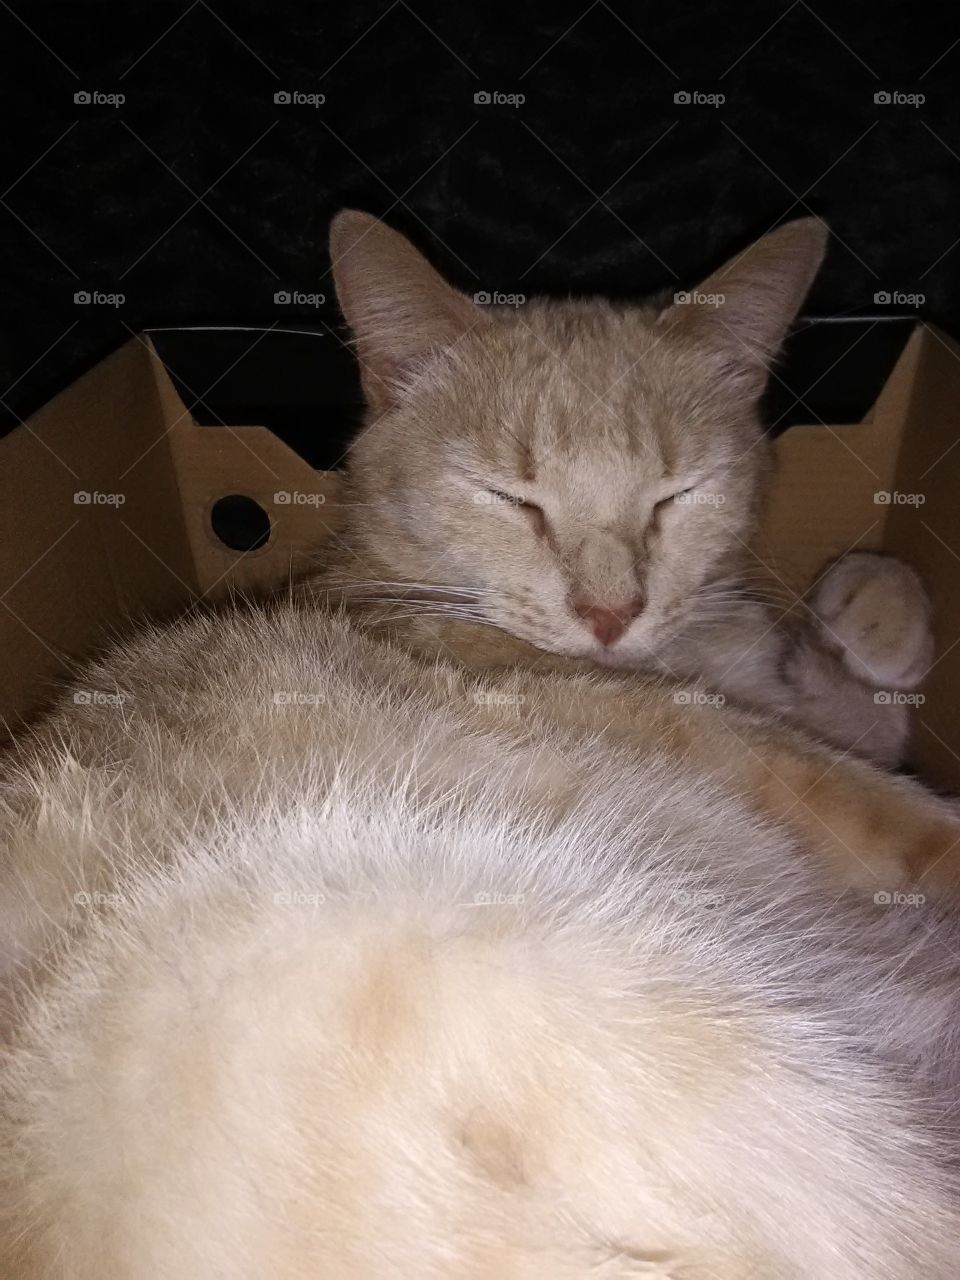 sleeping kitty in a shoe box